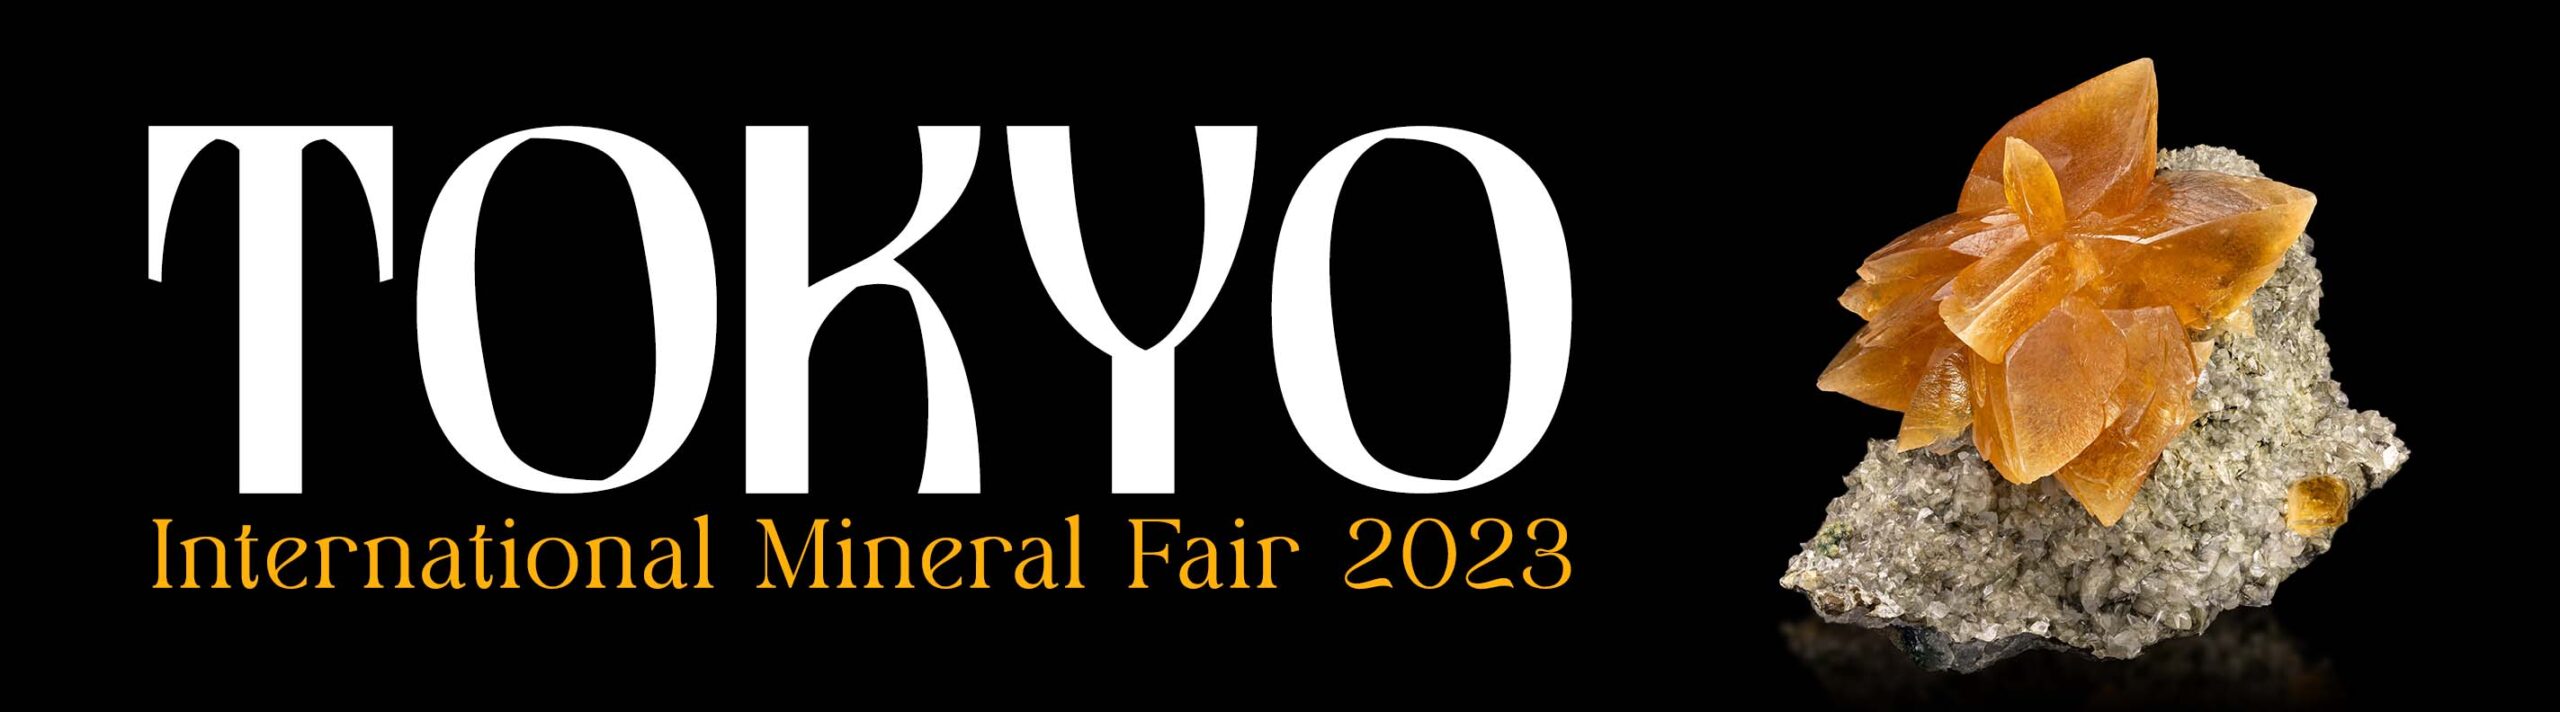 Tokyo International Mineral Fair 2023 Banner 2